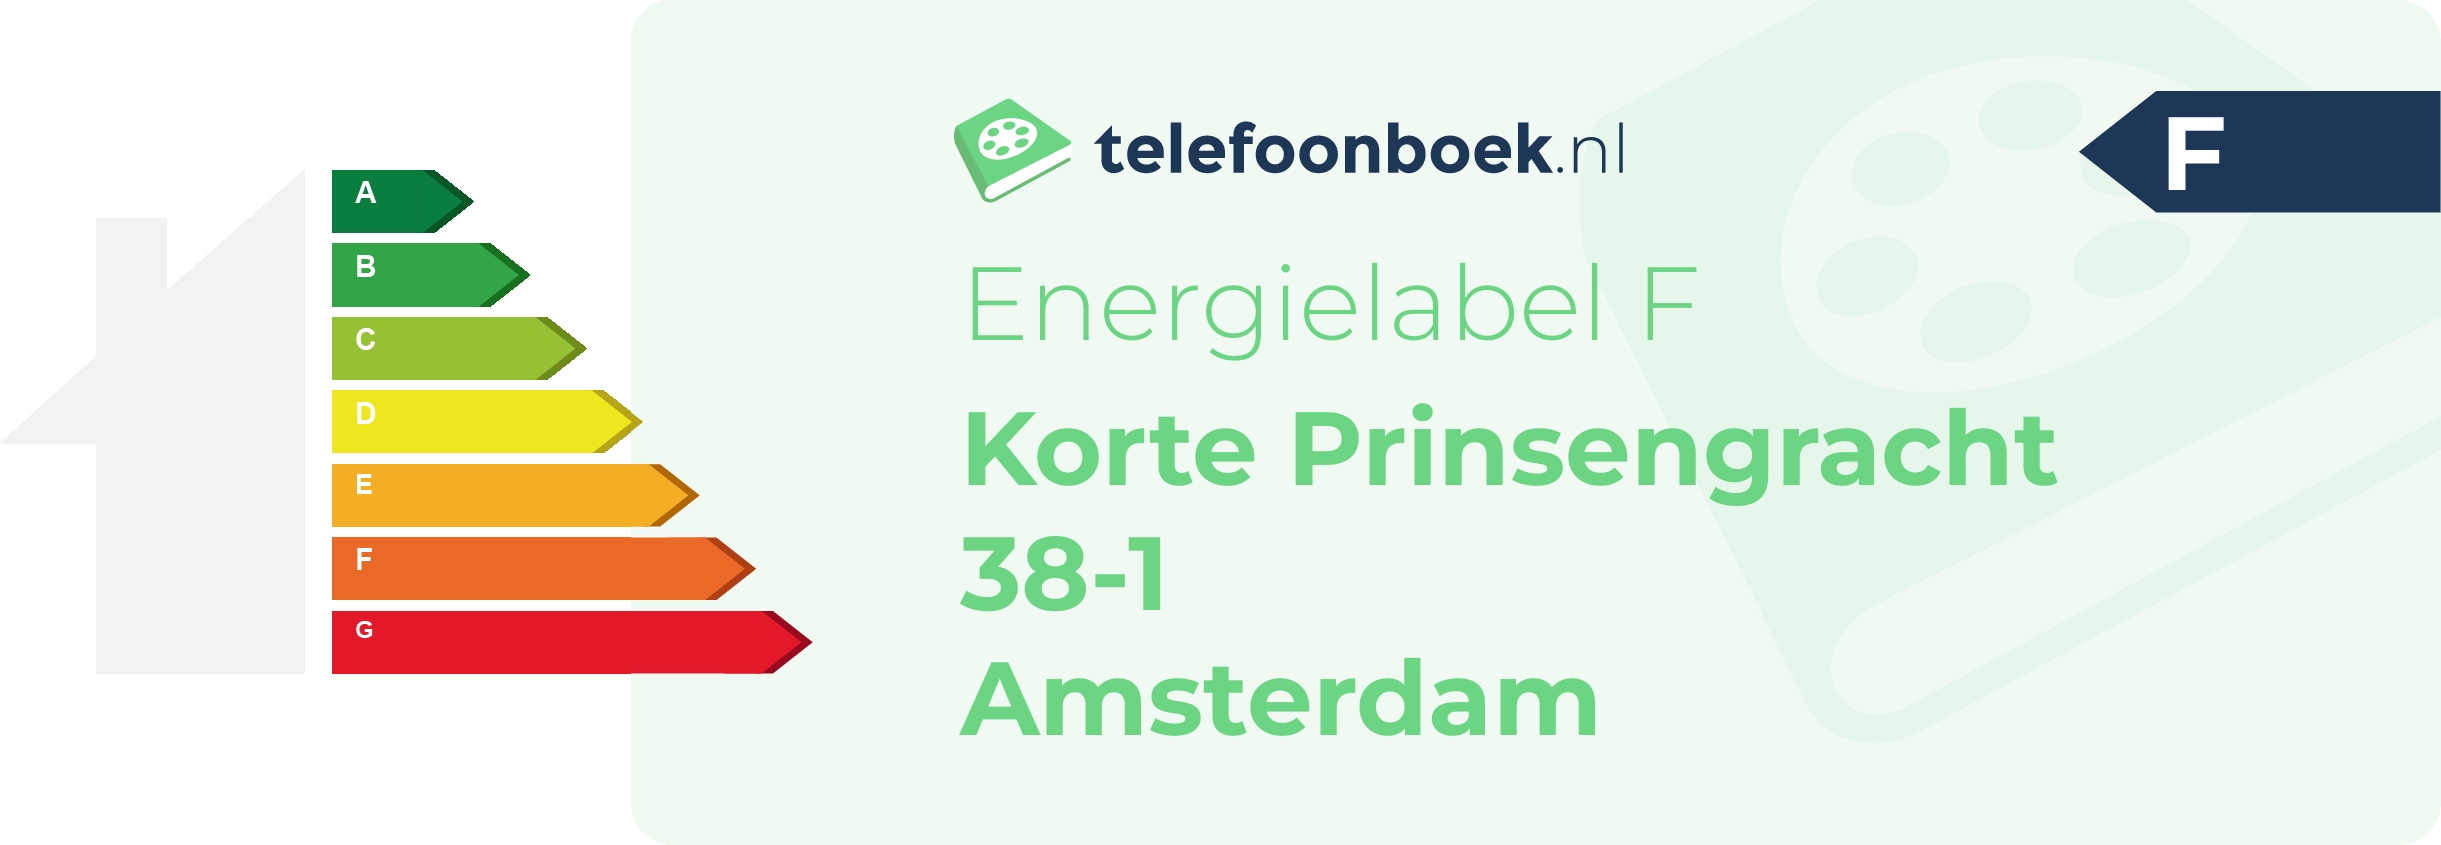 Energielabel Korte Prinsengracht 38-1 Amsterdam